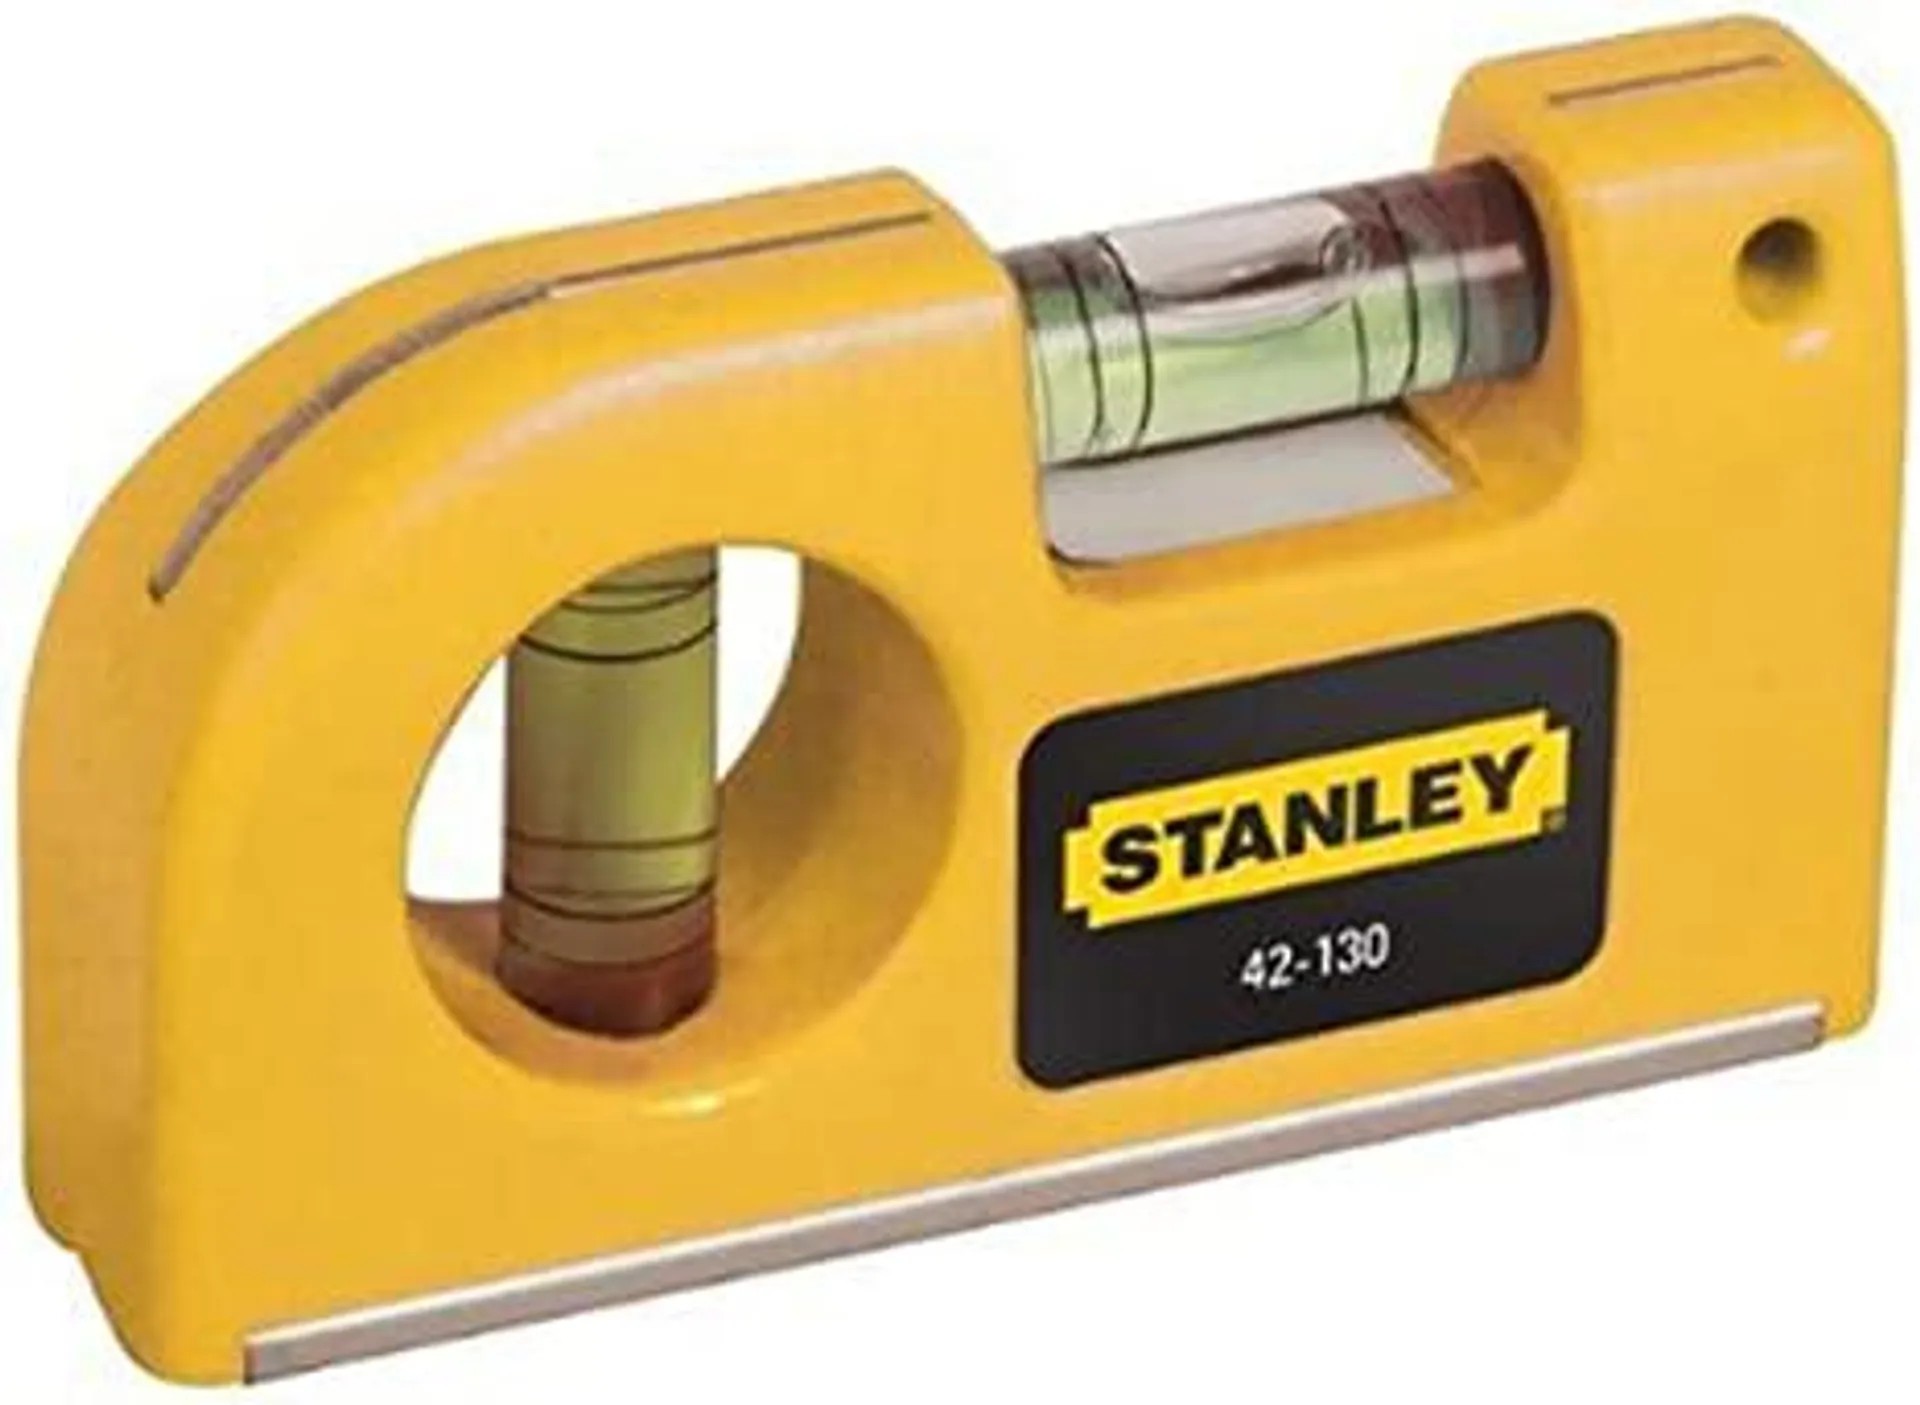 Stanley 0-42-130 Pocket Level magnetic horizontal/vertical, Yellow